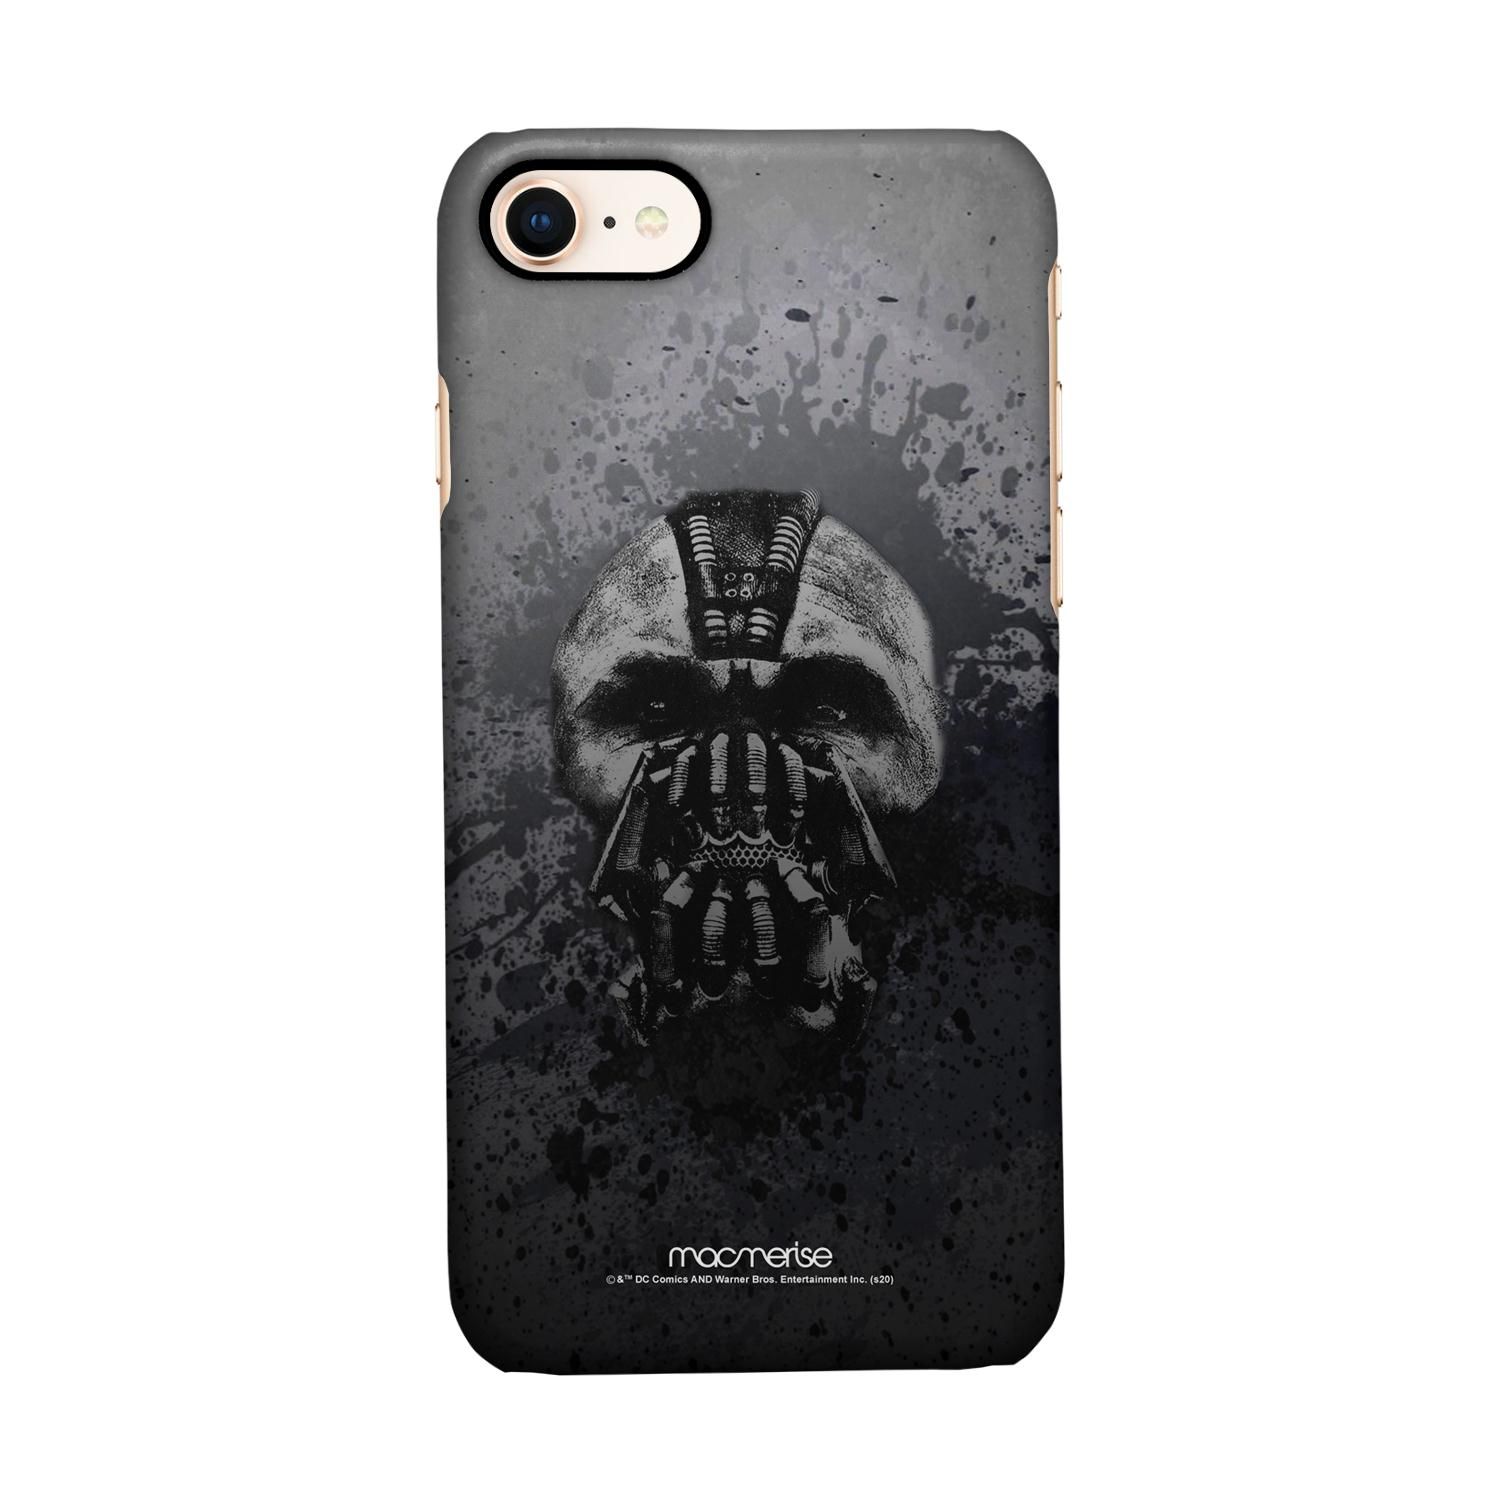 Buy Bane is Watching - Sleek Phone Case for iPhone 7 Online